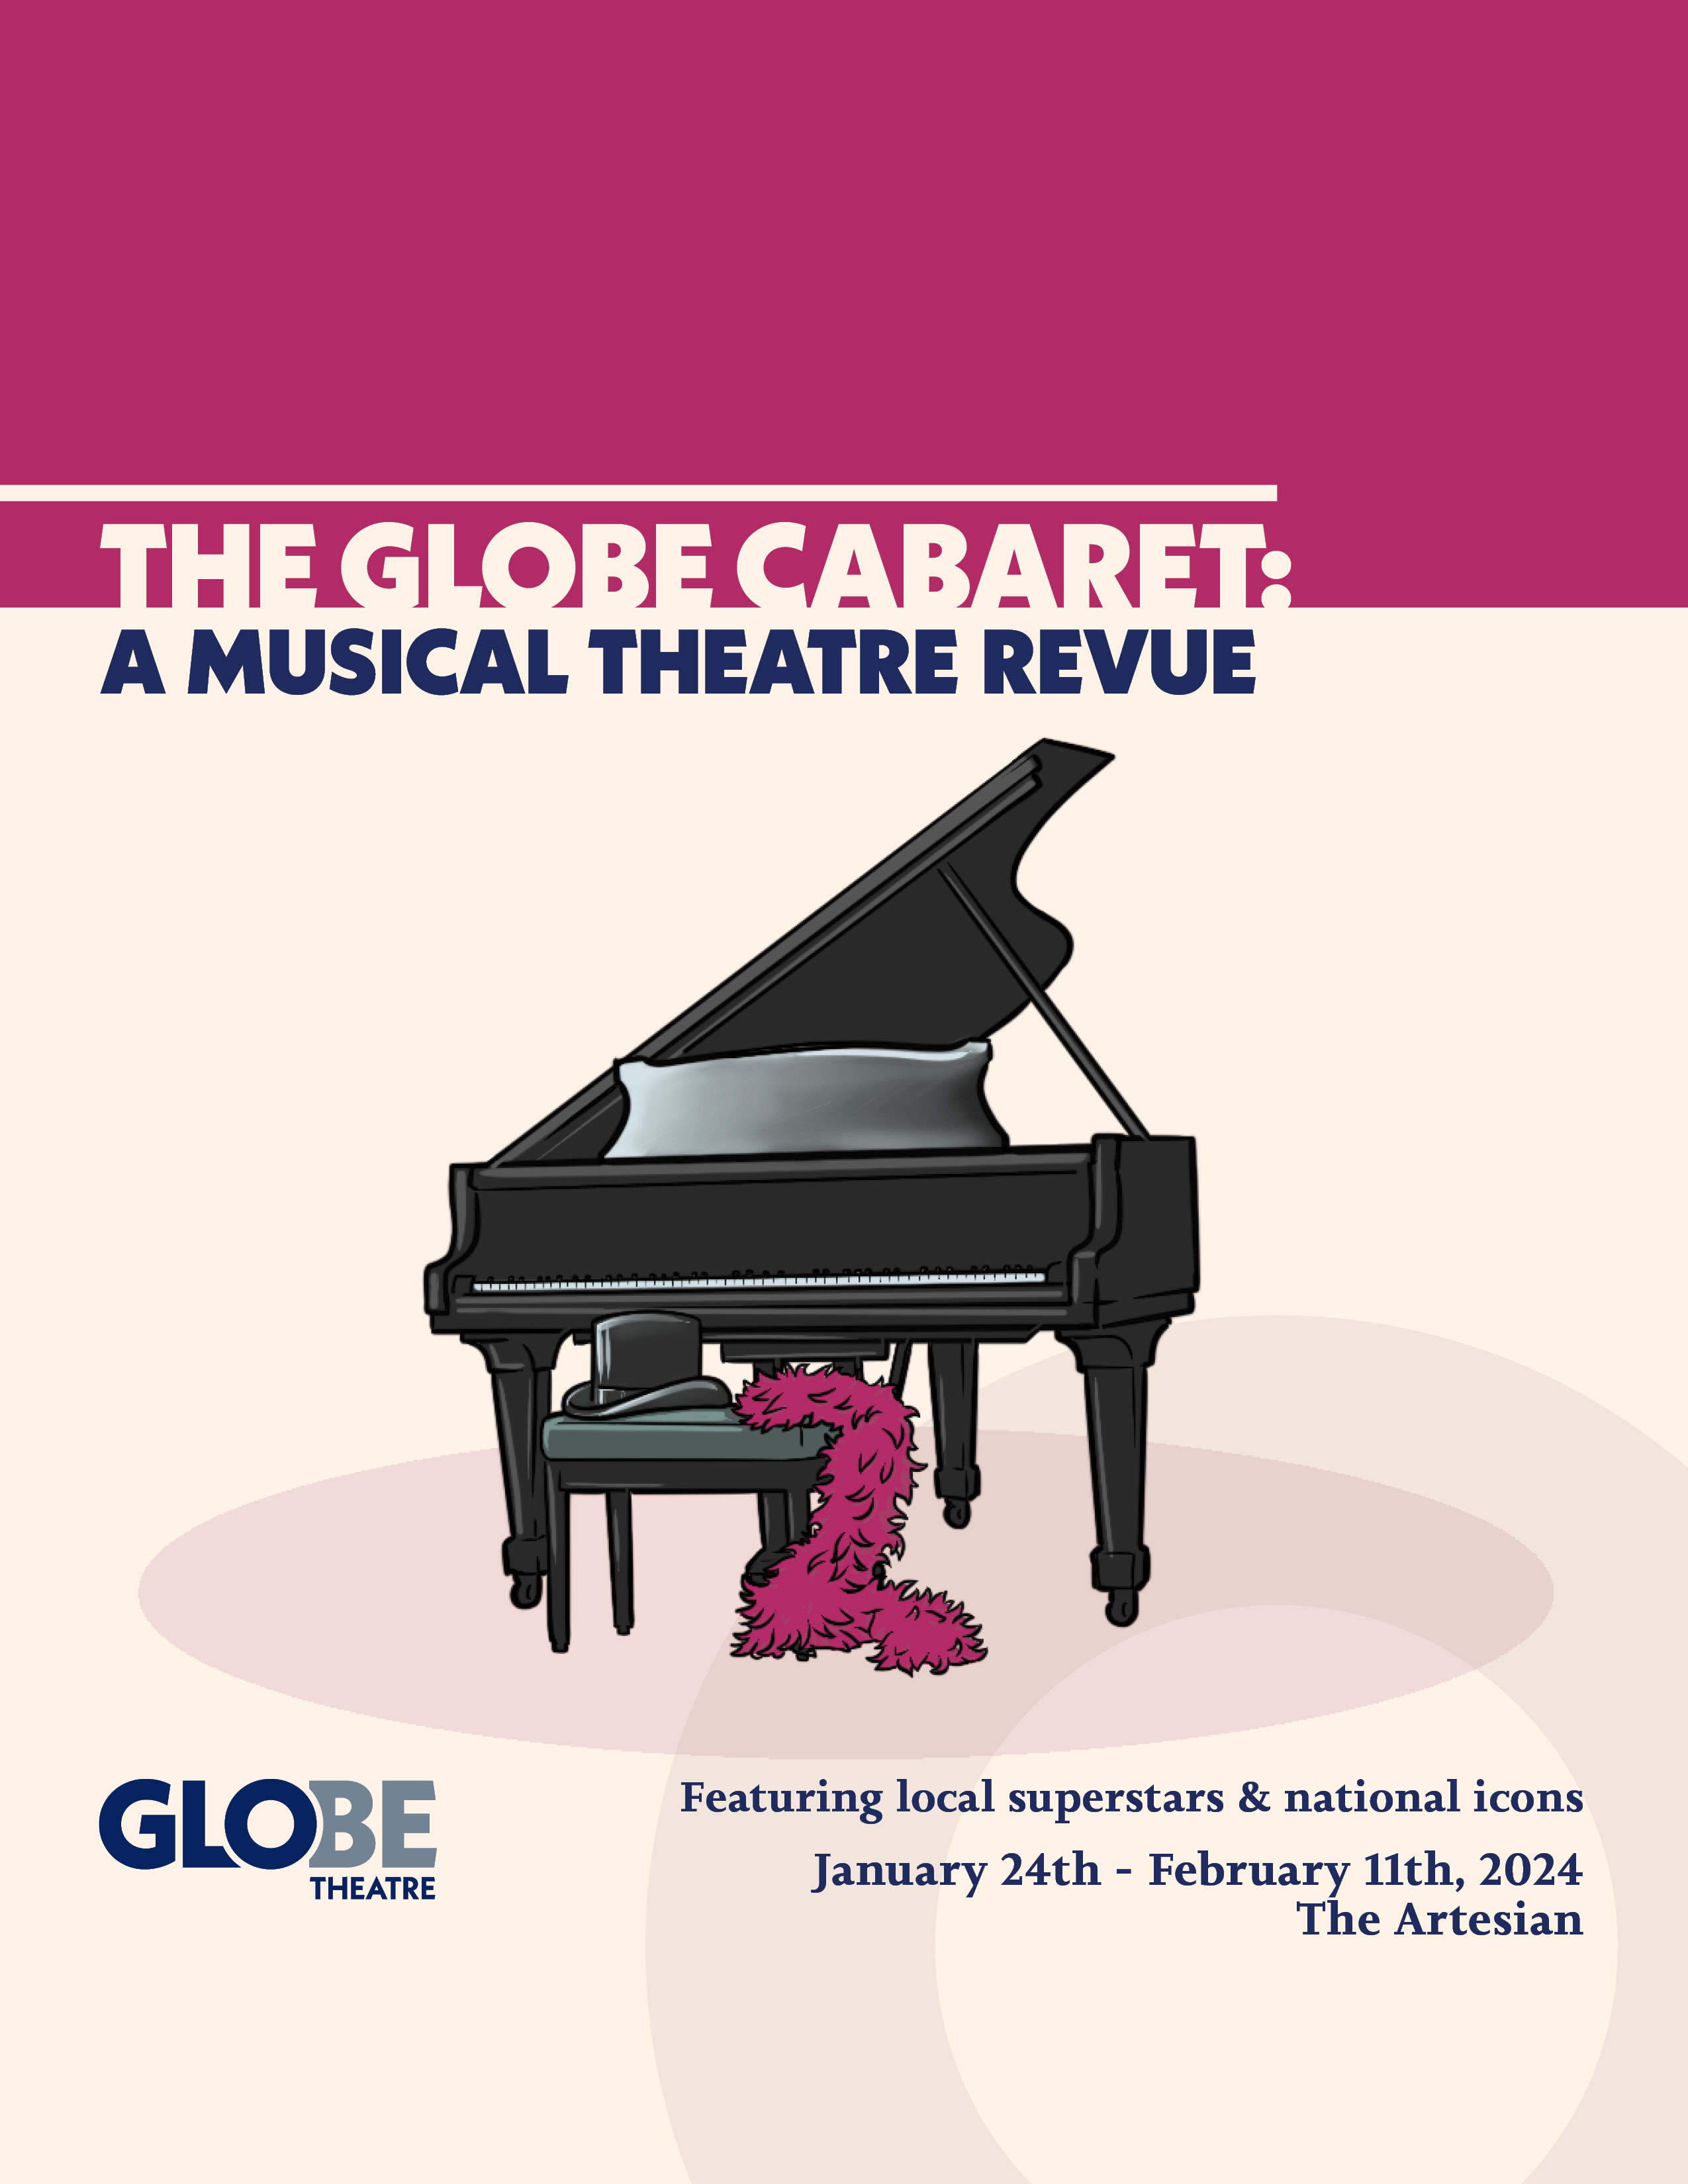 The Globe Cabaret: a Musical Theatre Revue